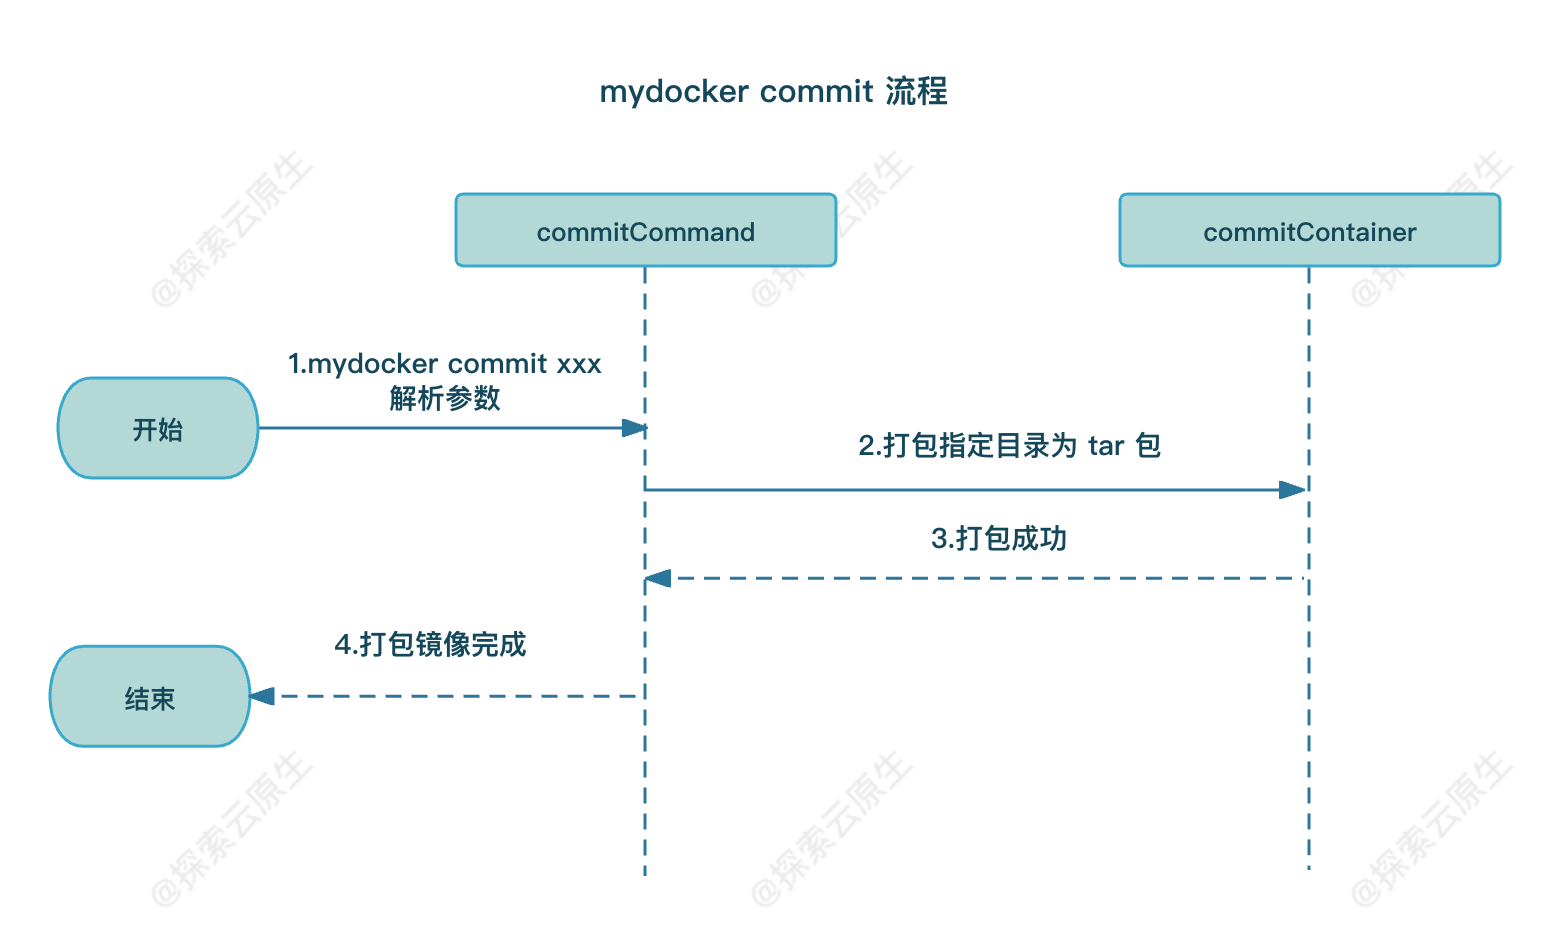 mydocker-commit-process.png